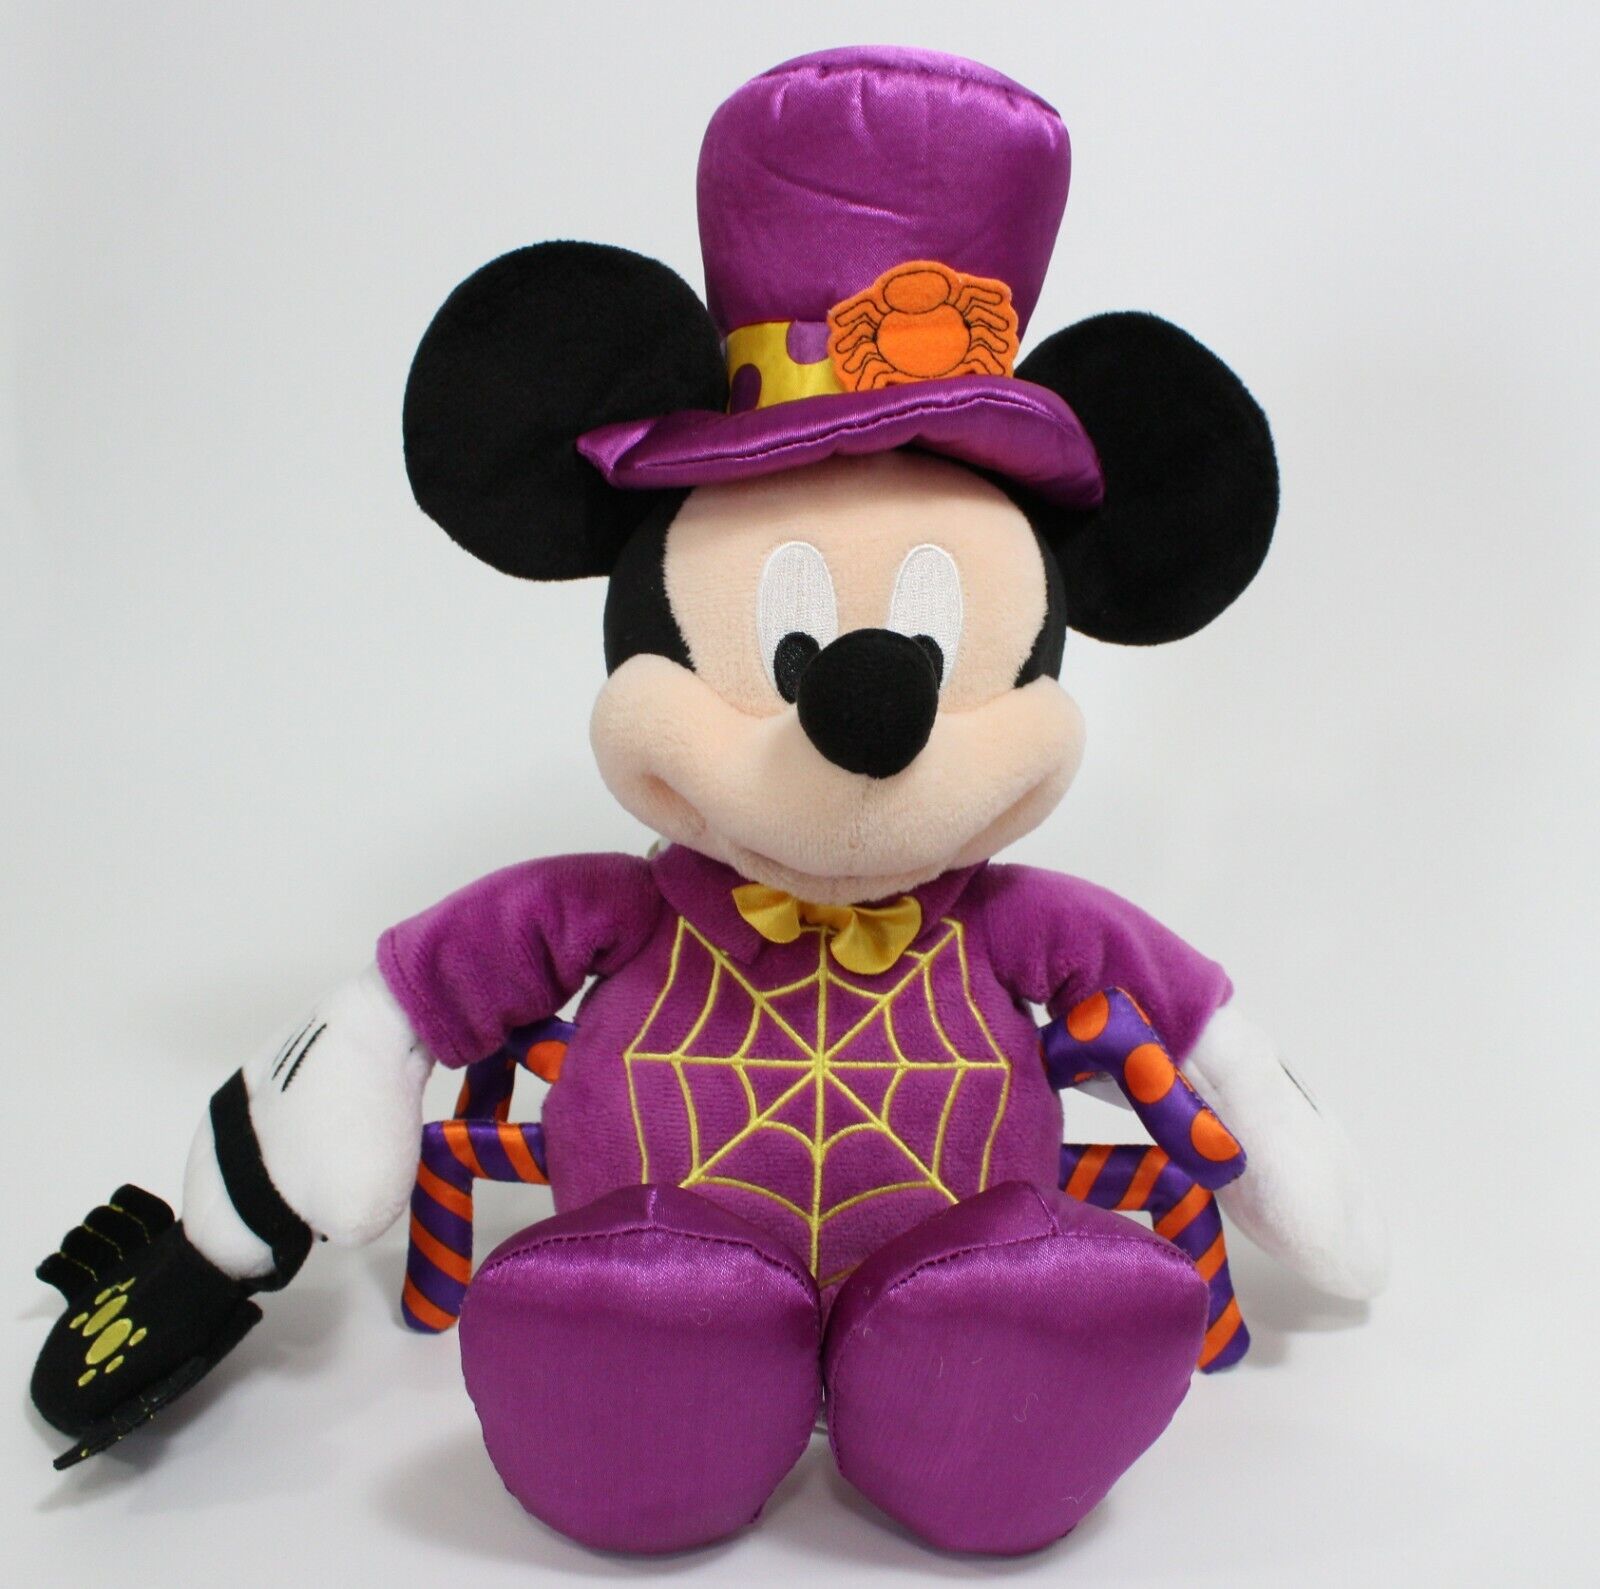 Disney HALLOWEEN Mickey Mouse 2017 Stuffed Plush Toy, 15